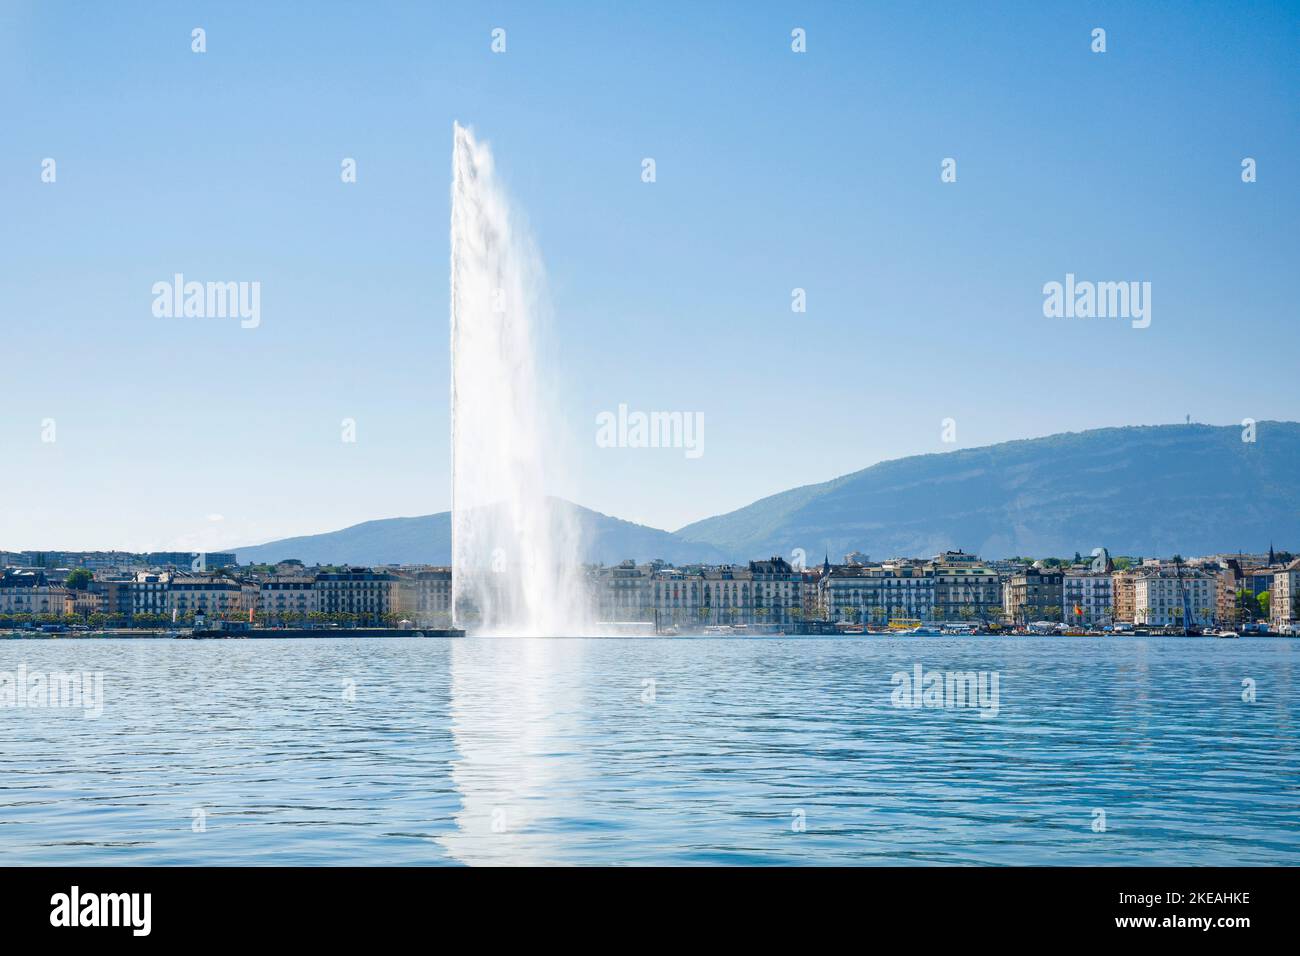 Jet d'eau, landmark of the Lake Geneva, Switzerland, Kanton Genf, Geneva Stock Photo